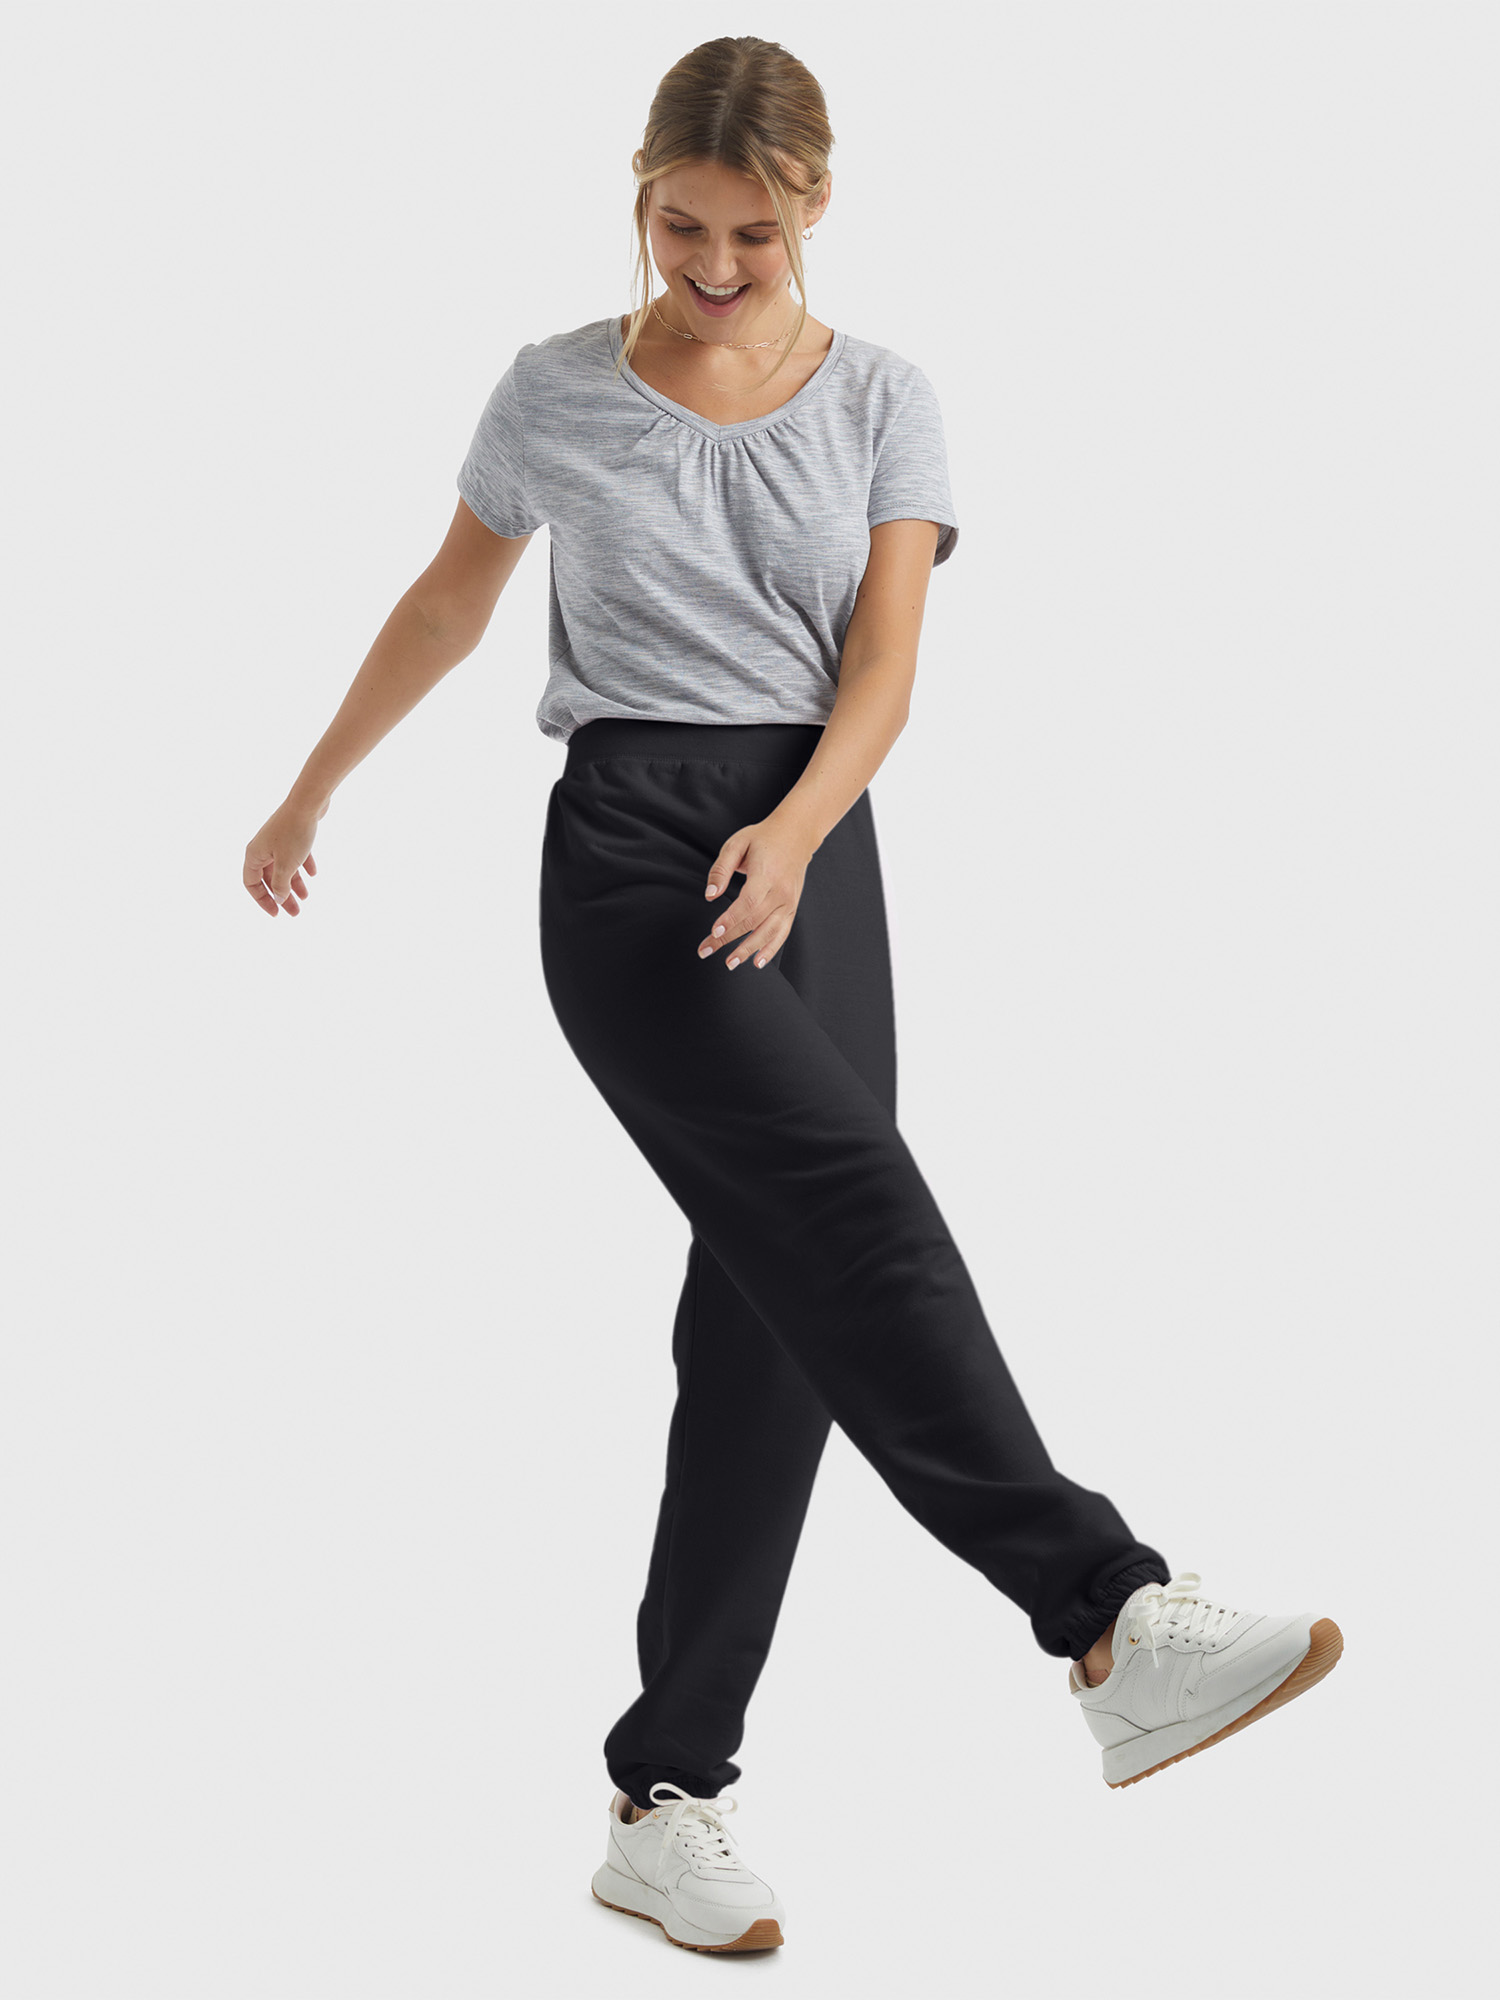 Hanes ComfortSoft Women's Sweatpants, 29” Inseam, Sizes S-XXL - image 4 of 6